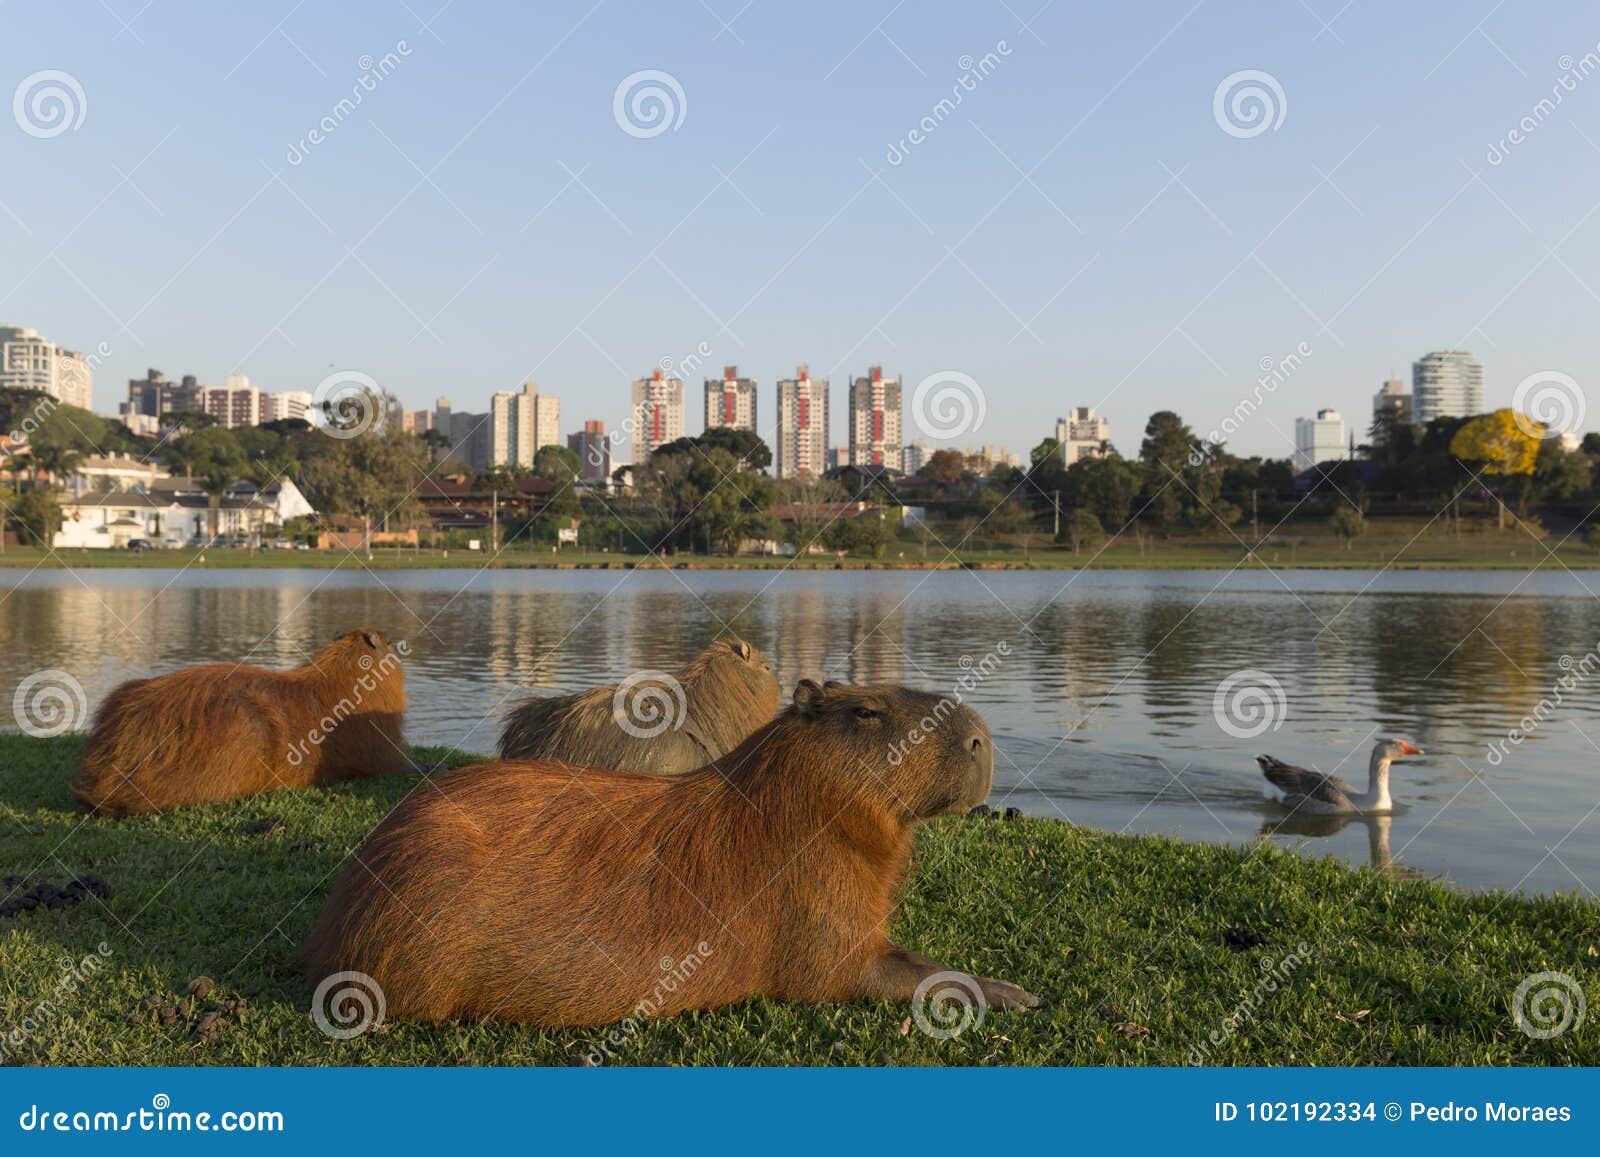 capybaras resting.